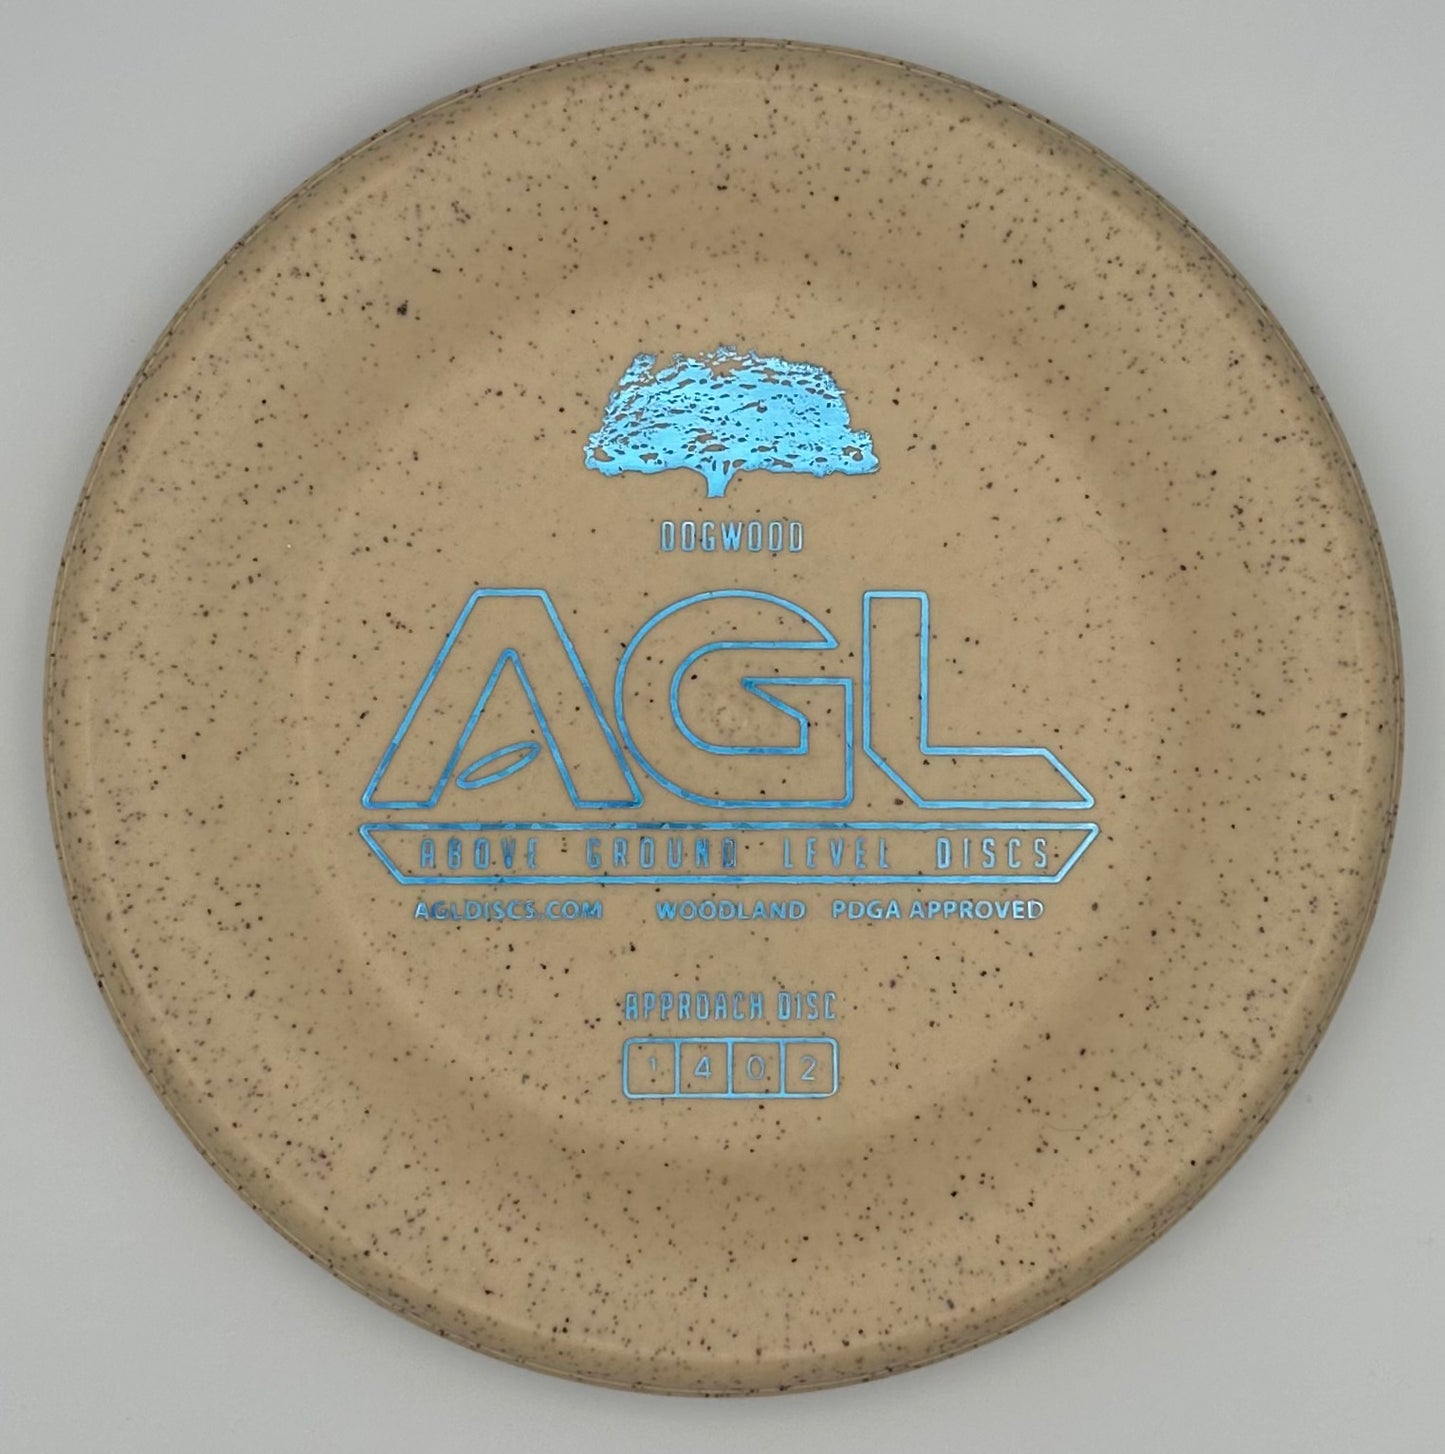 AGL Discs - Cookies and Cream Woodland Hemp DogWood (AGL Bar Stamp)